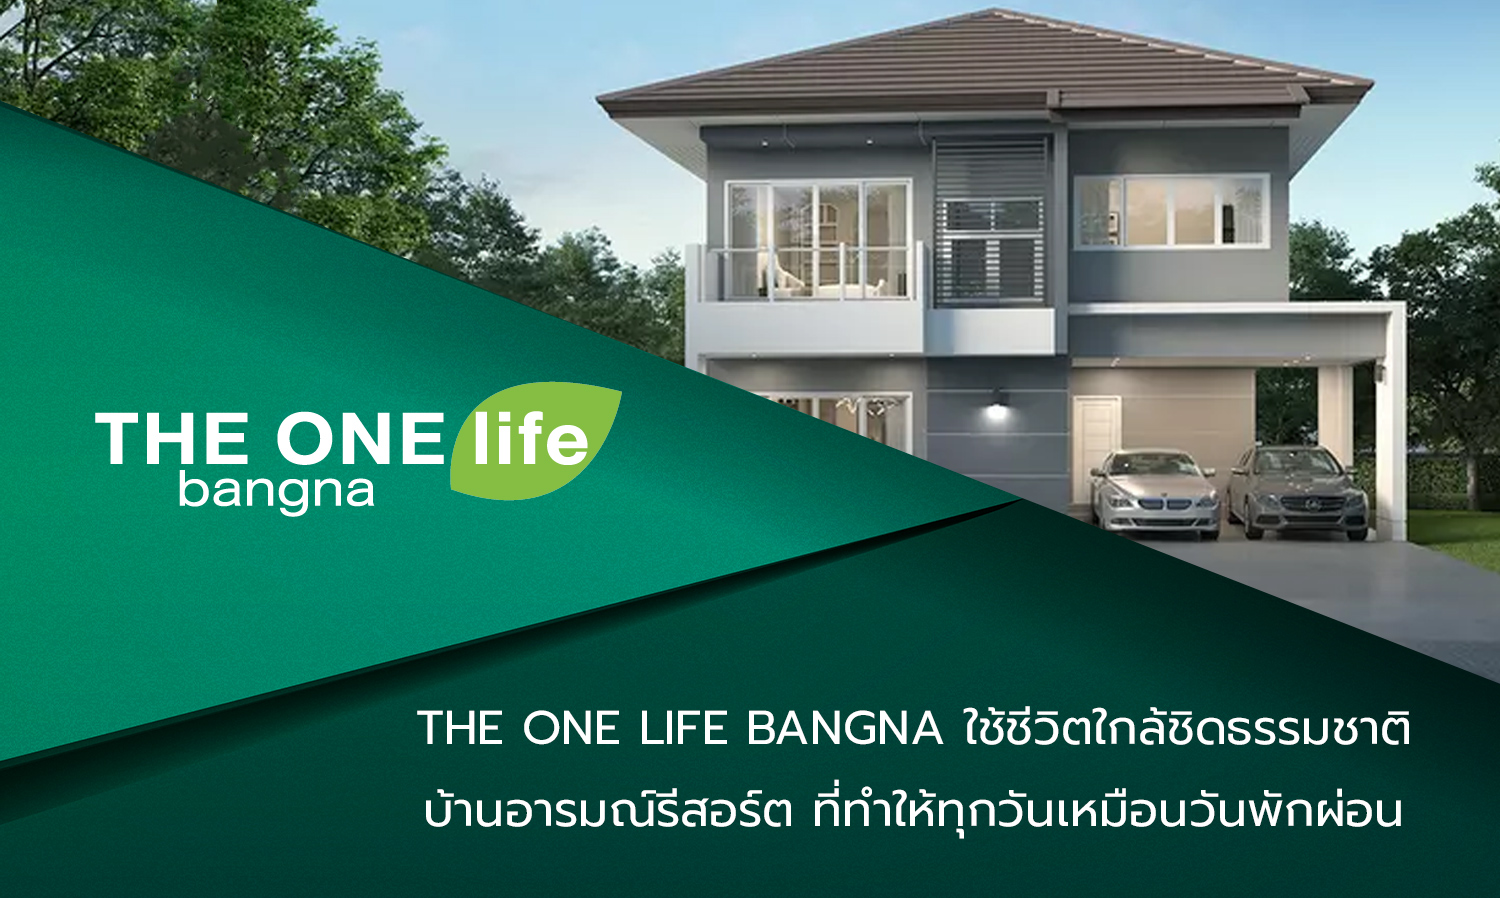 the-one-life-bangna ใช้ชีวิตใกล้ชิดธรรมชาติ-บ้านอารมณ์รีสอร์ต-ที่ทำให้ทุกวันเหมือนวันพักผ่อน